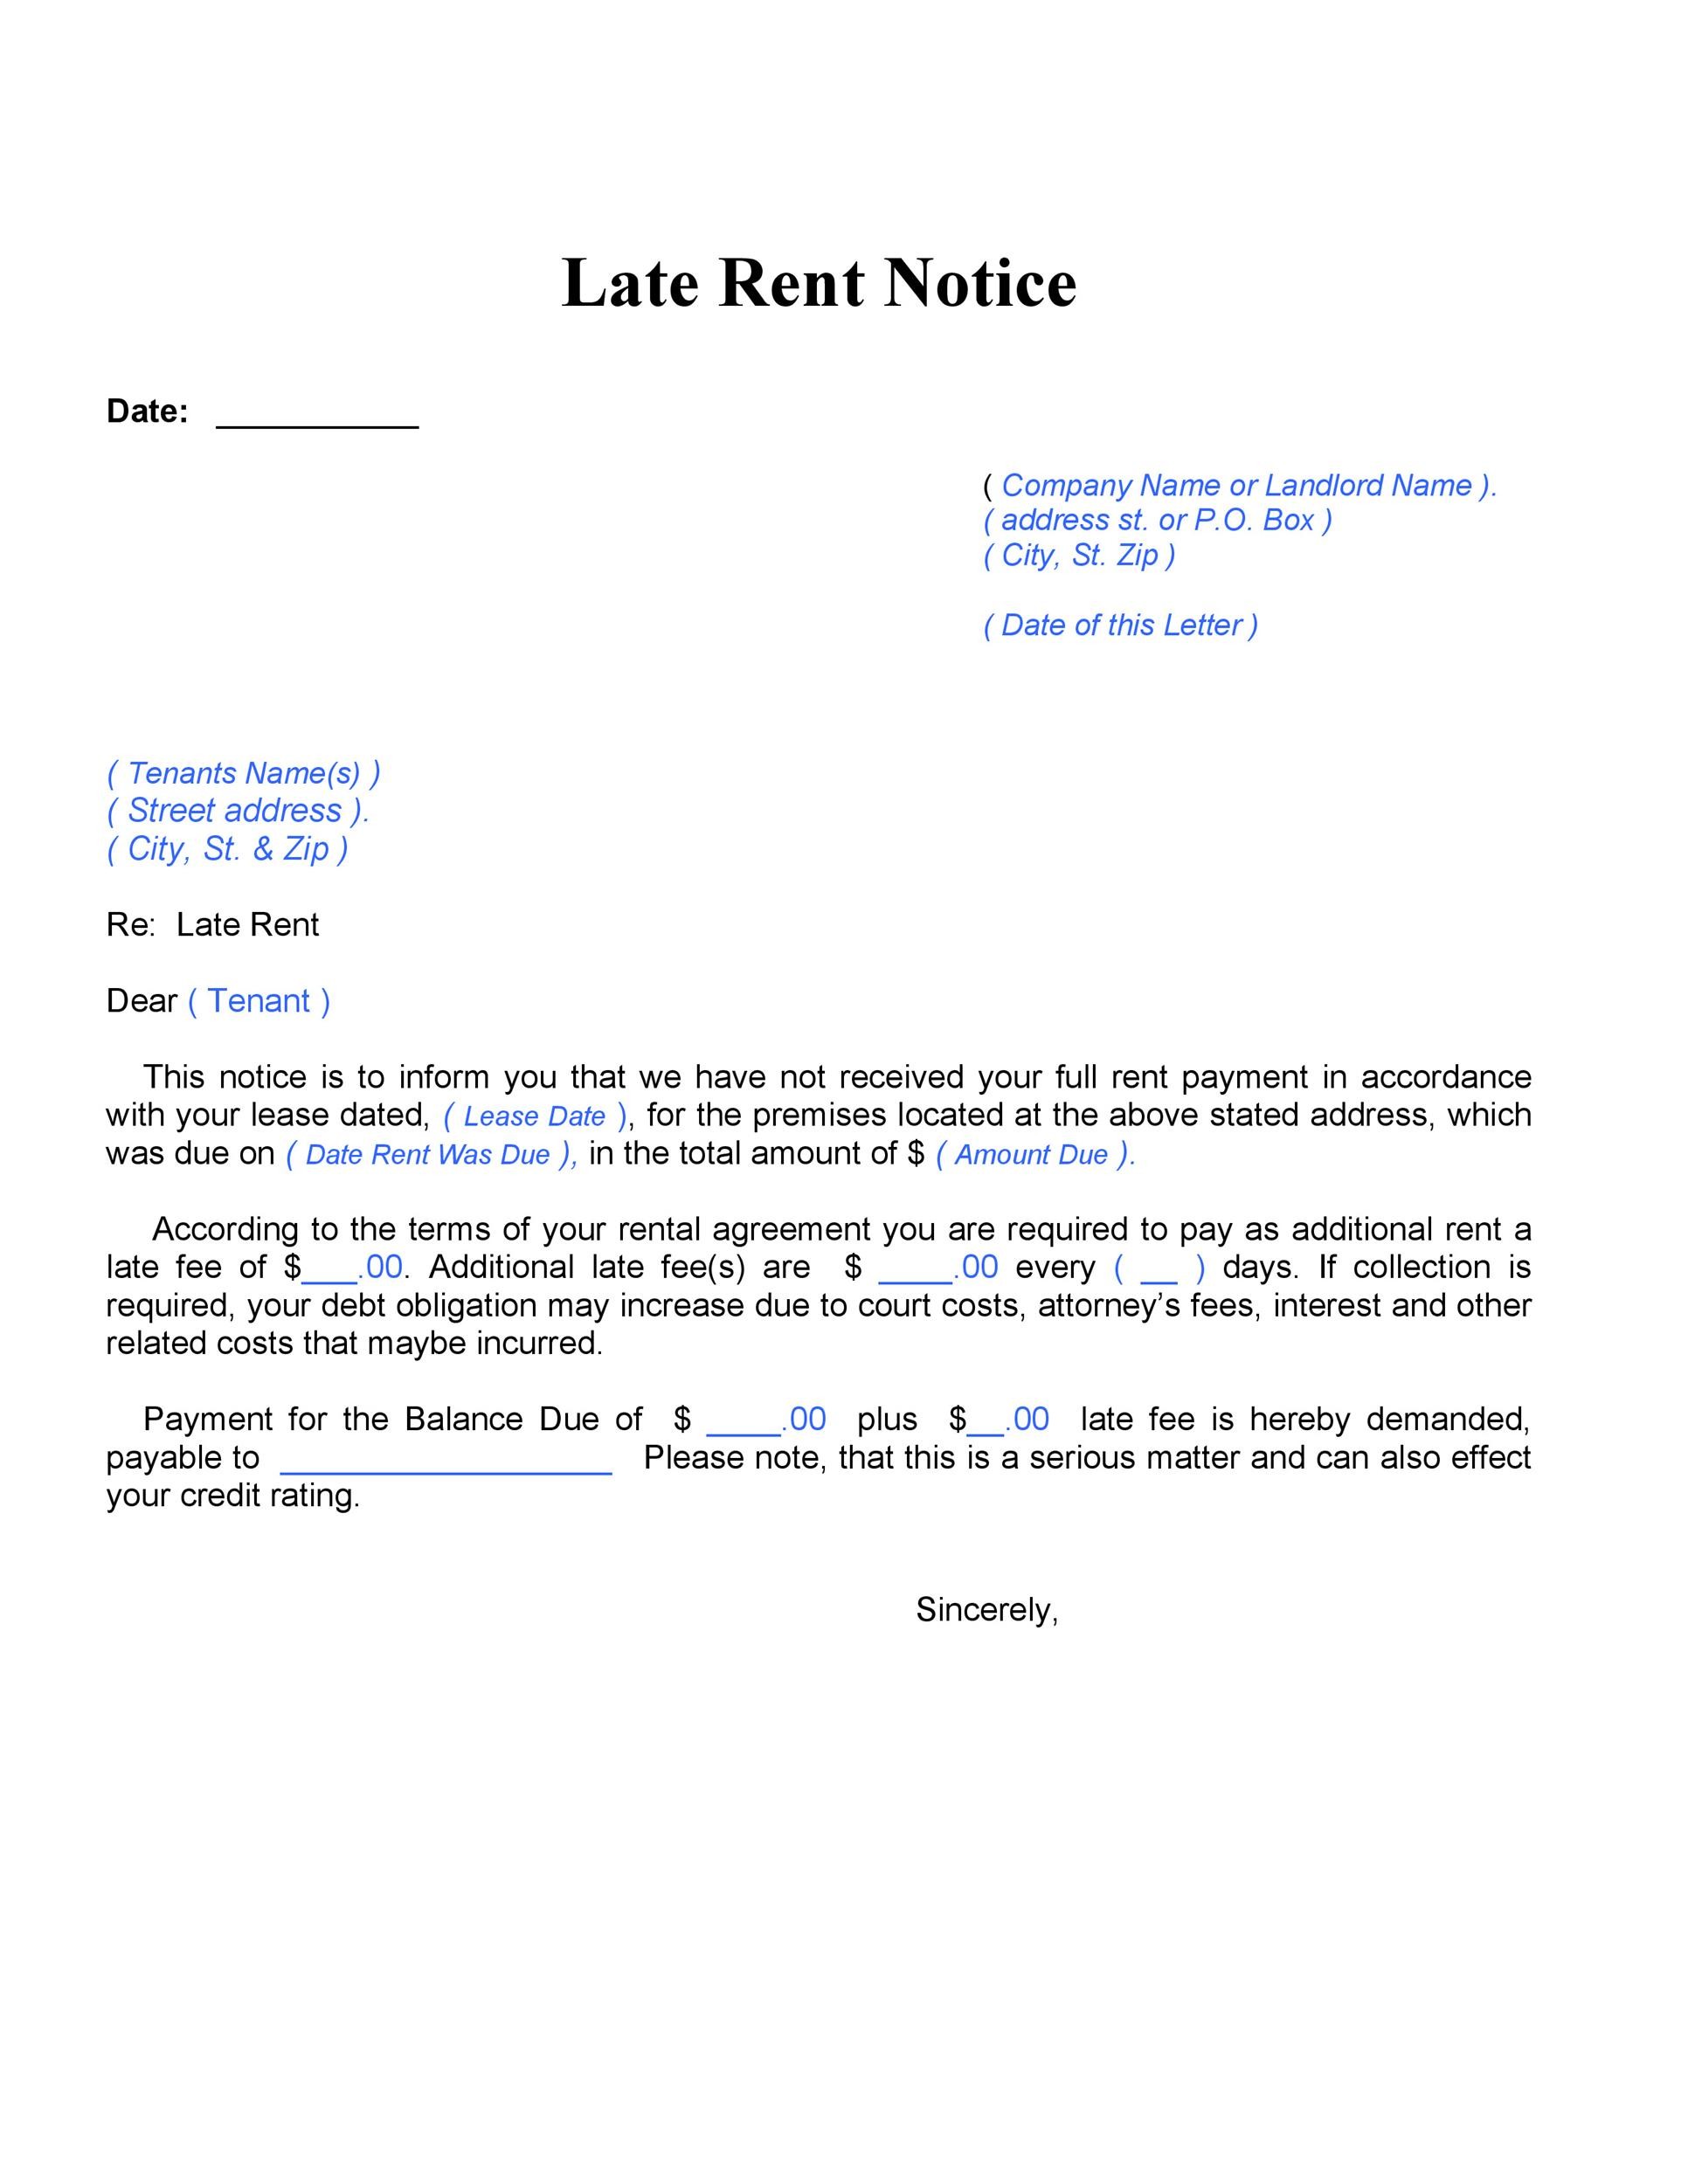 34 Printable Late Rent Notice Templates ᐅ TemplateLab